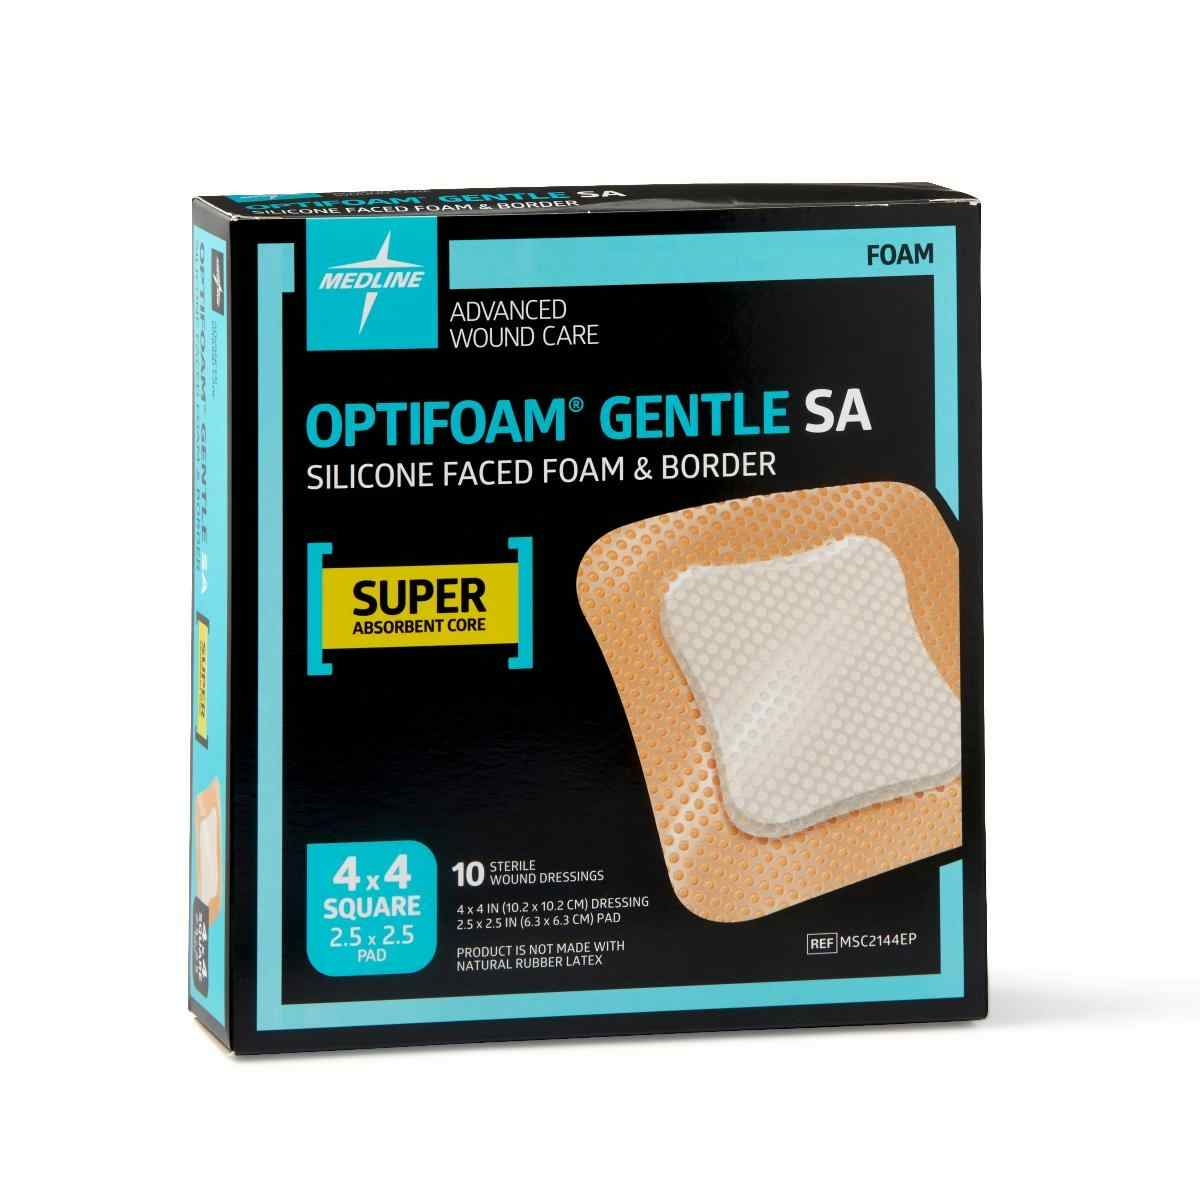 Optifoam Gentle SA Silicone-Faced Foam Dressing, MSC2144EPZ, 4 X 4 Inches - Box of 10